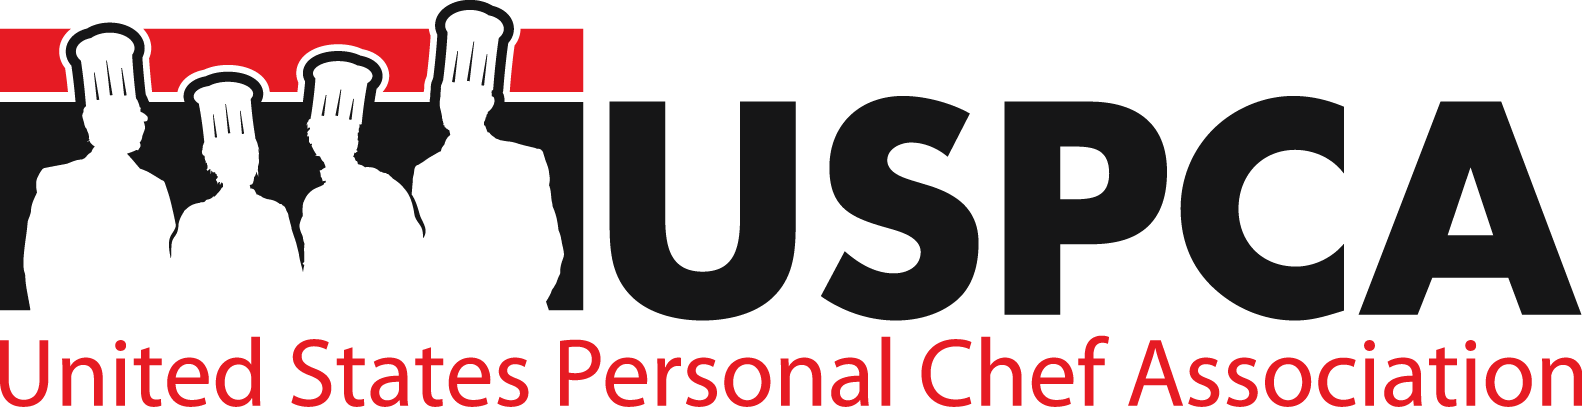 United States Personal Chef Association (USPCA) Logo